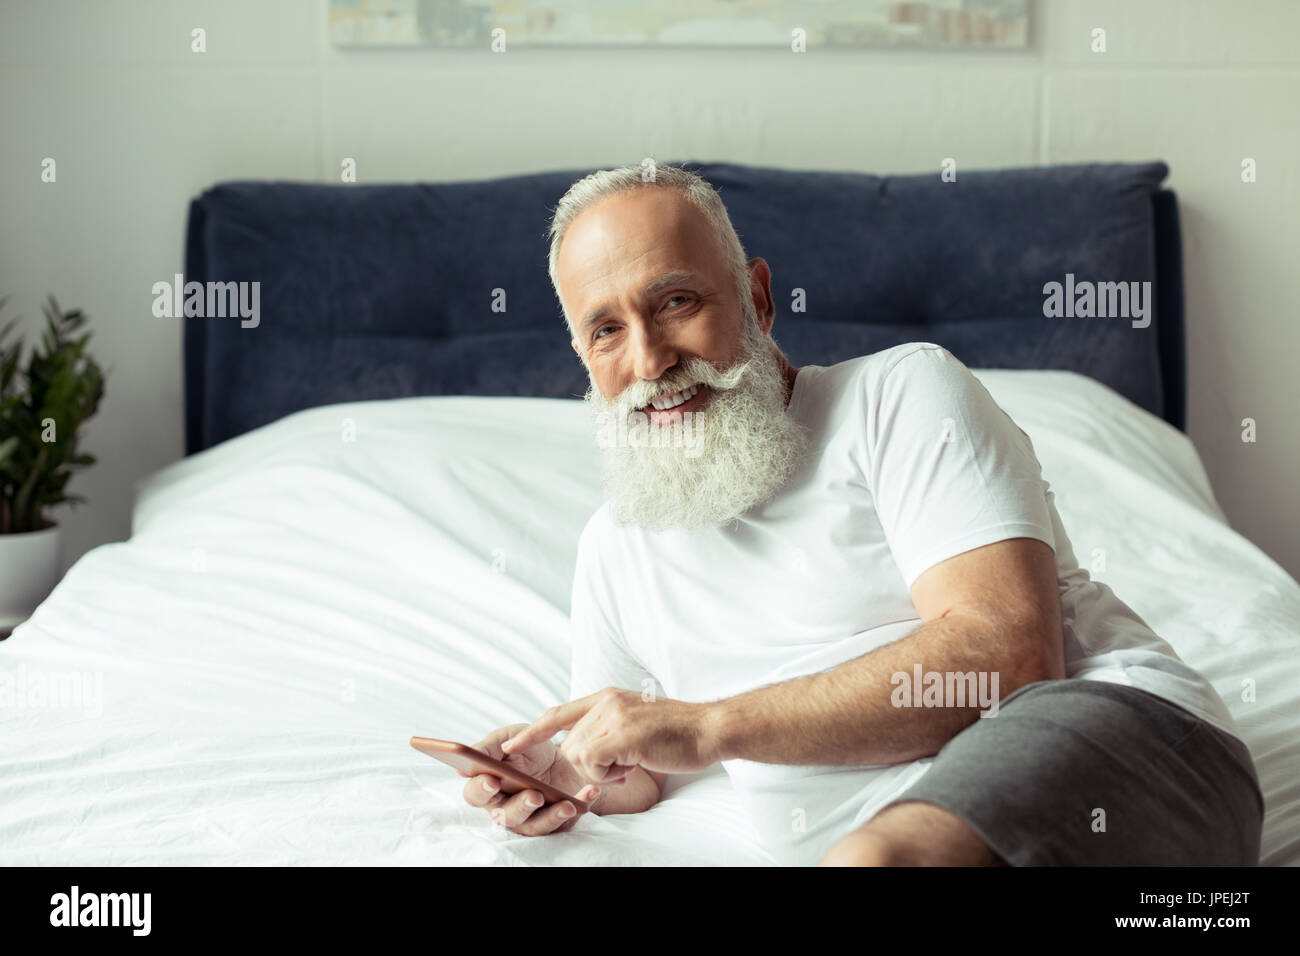 Les barbus man using smartphone alors que lying on bed Banque D'Images